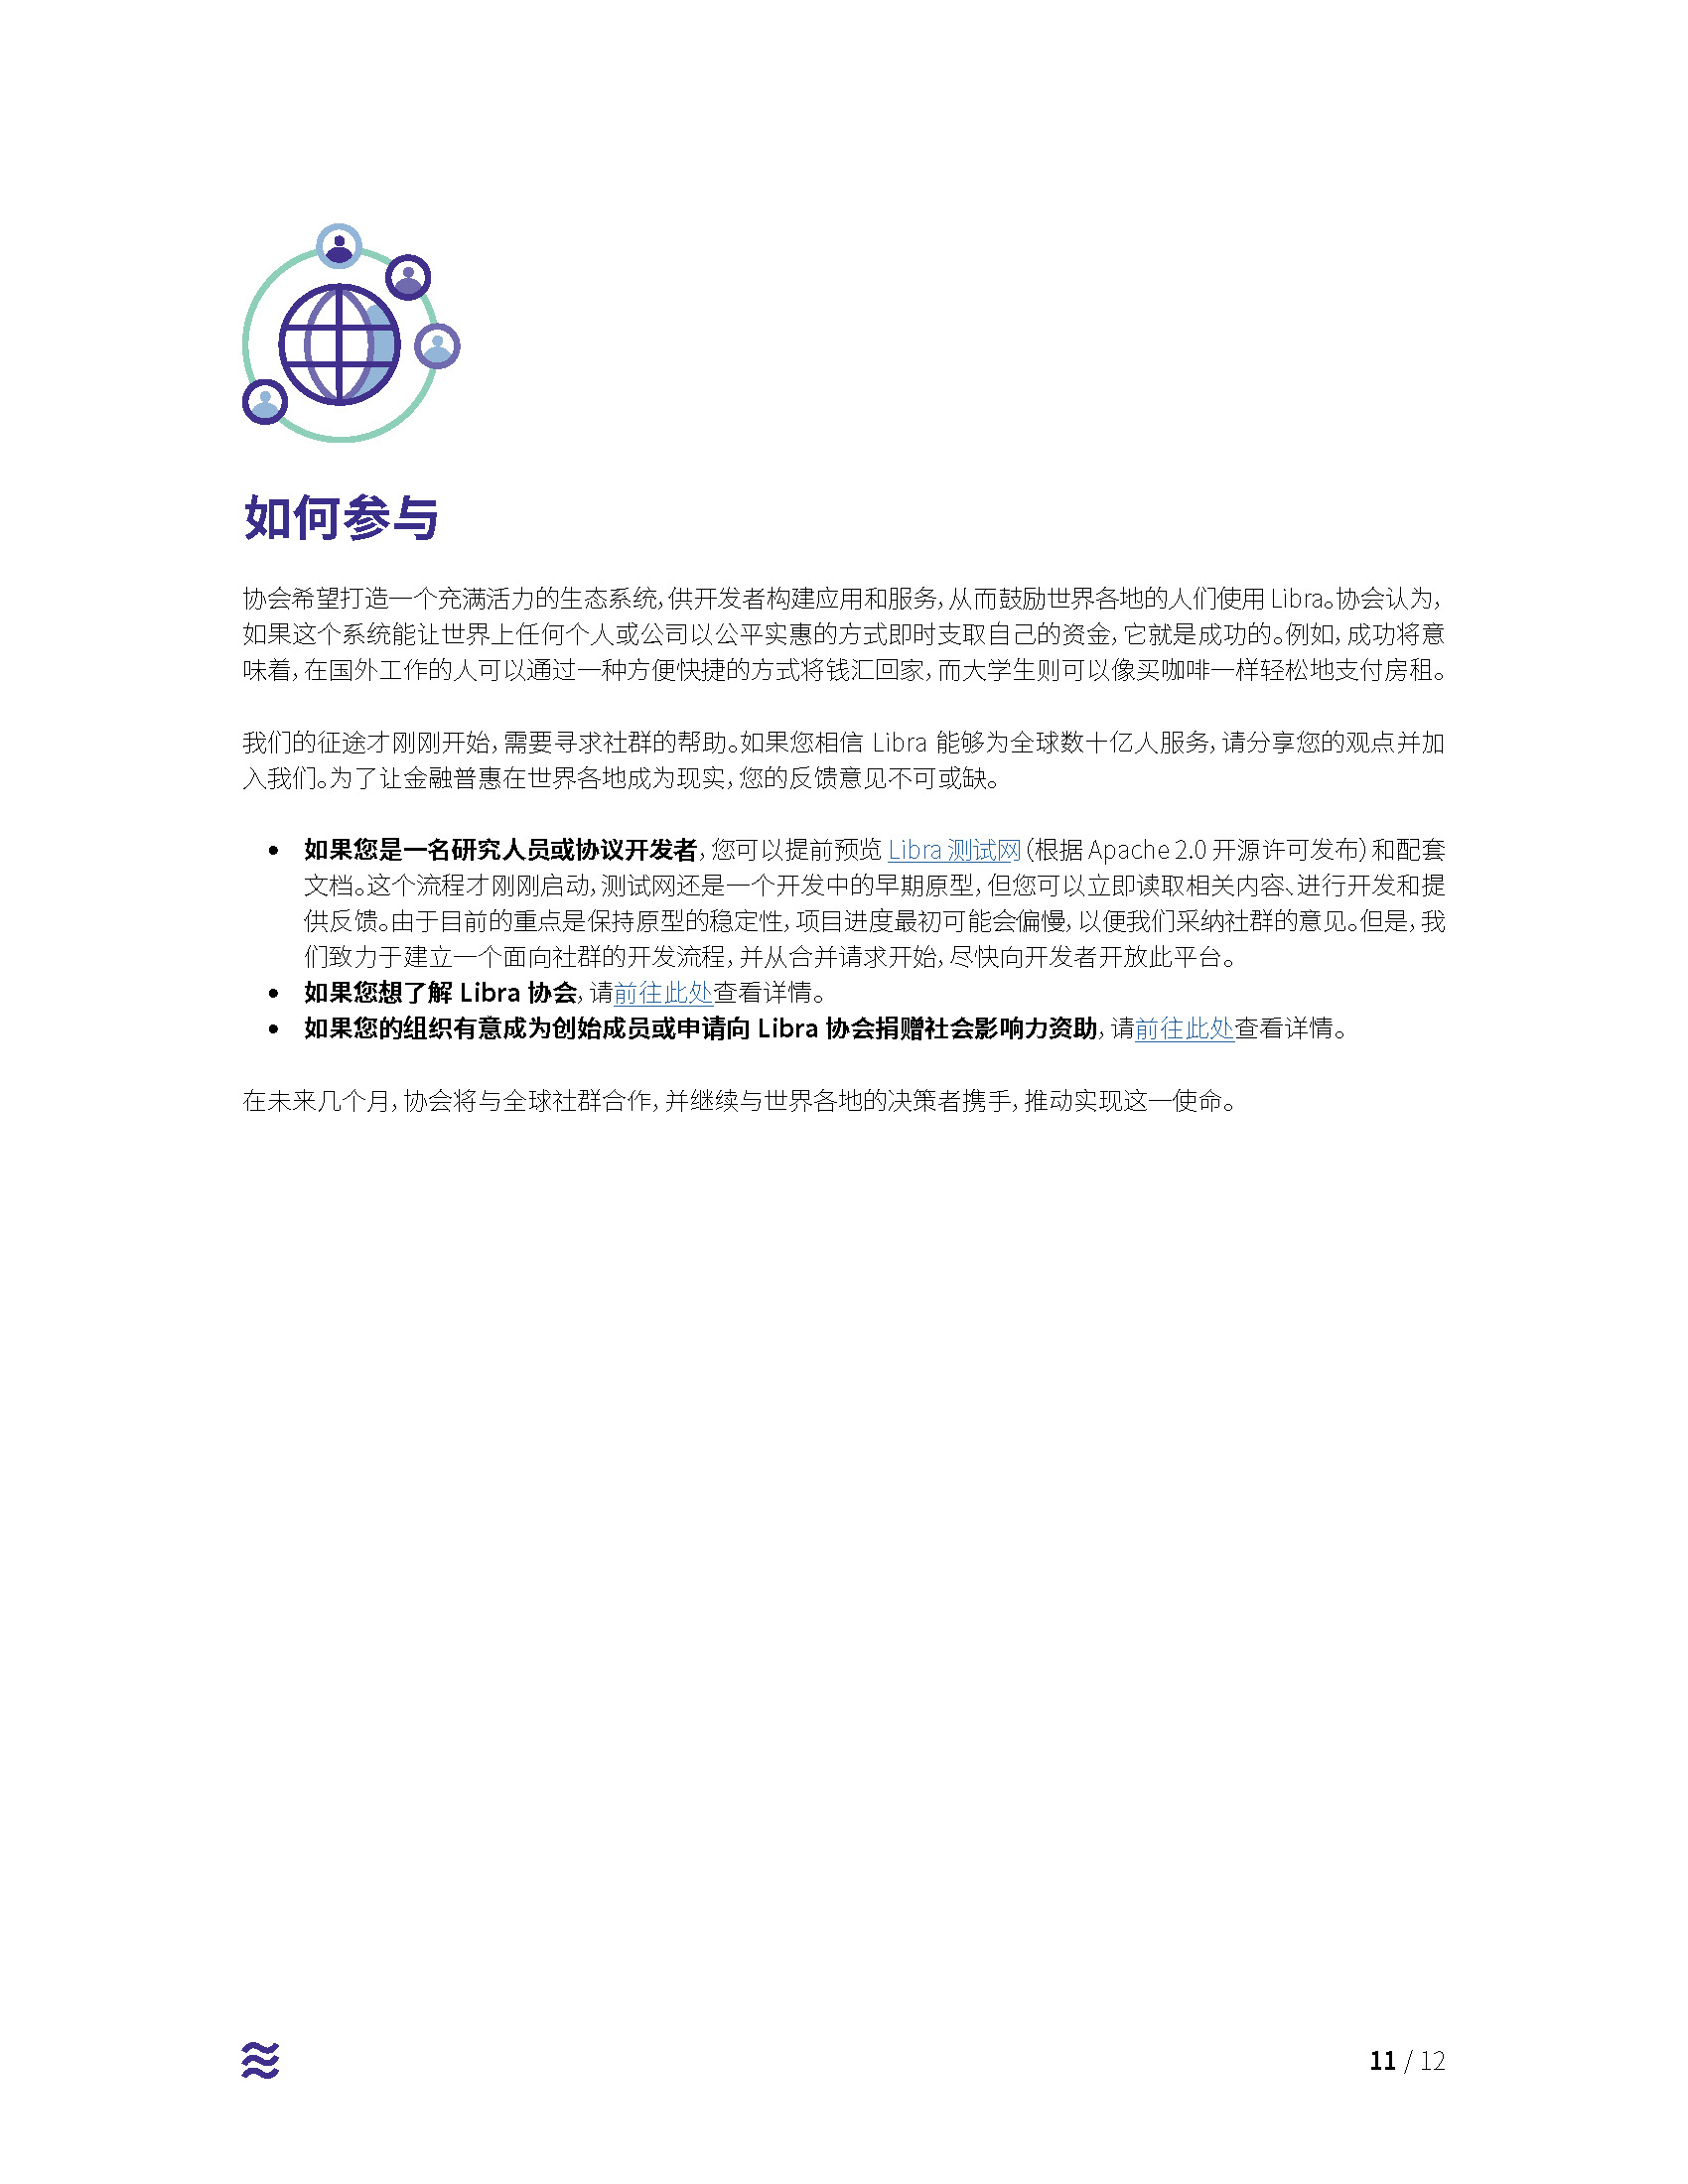 Facebook加密货币项目Libra中文白皮书配图(11)